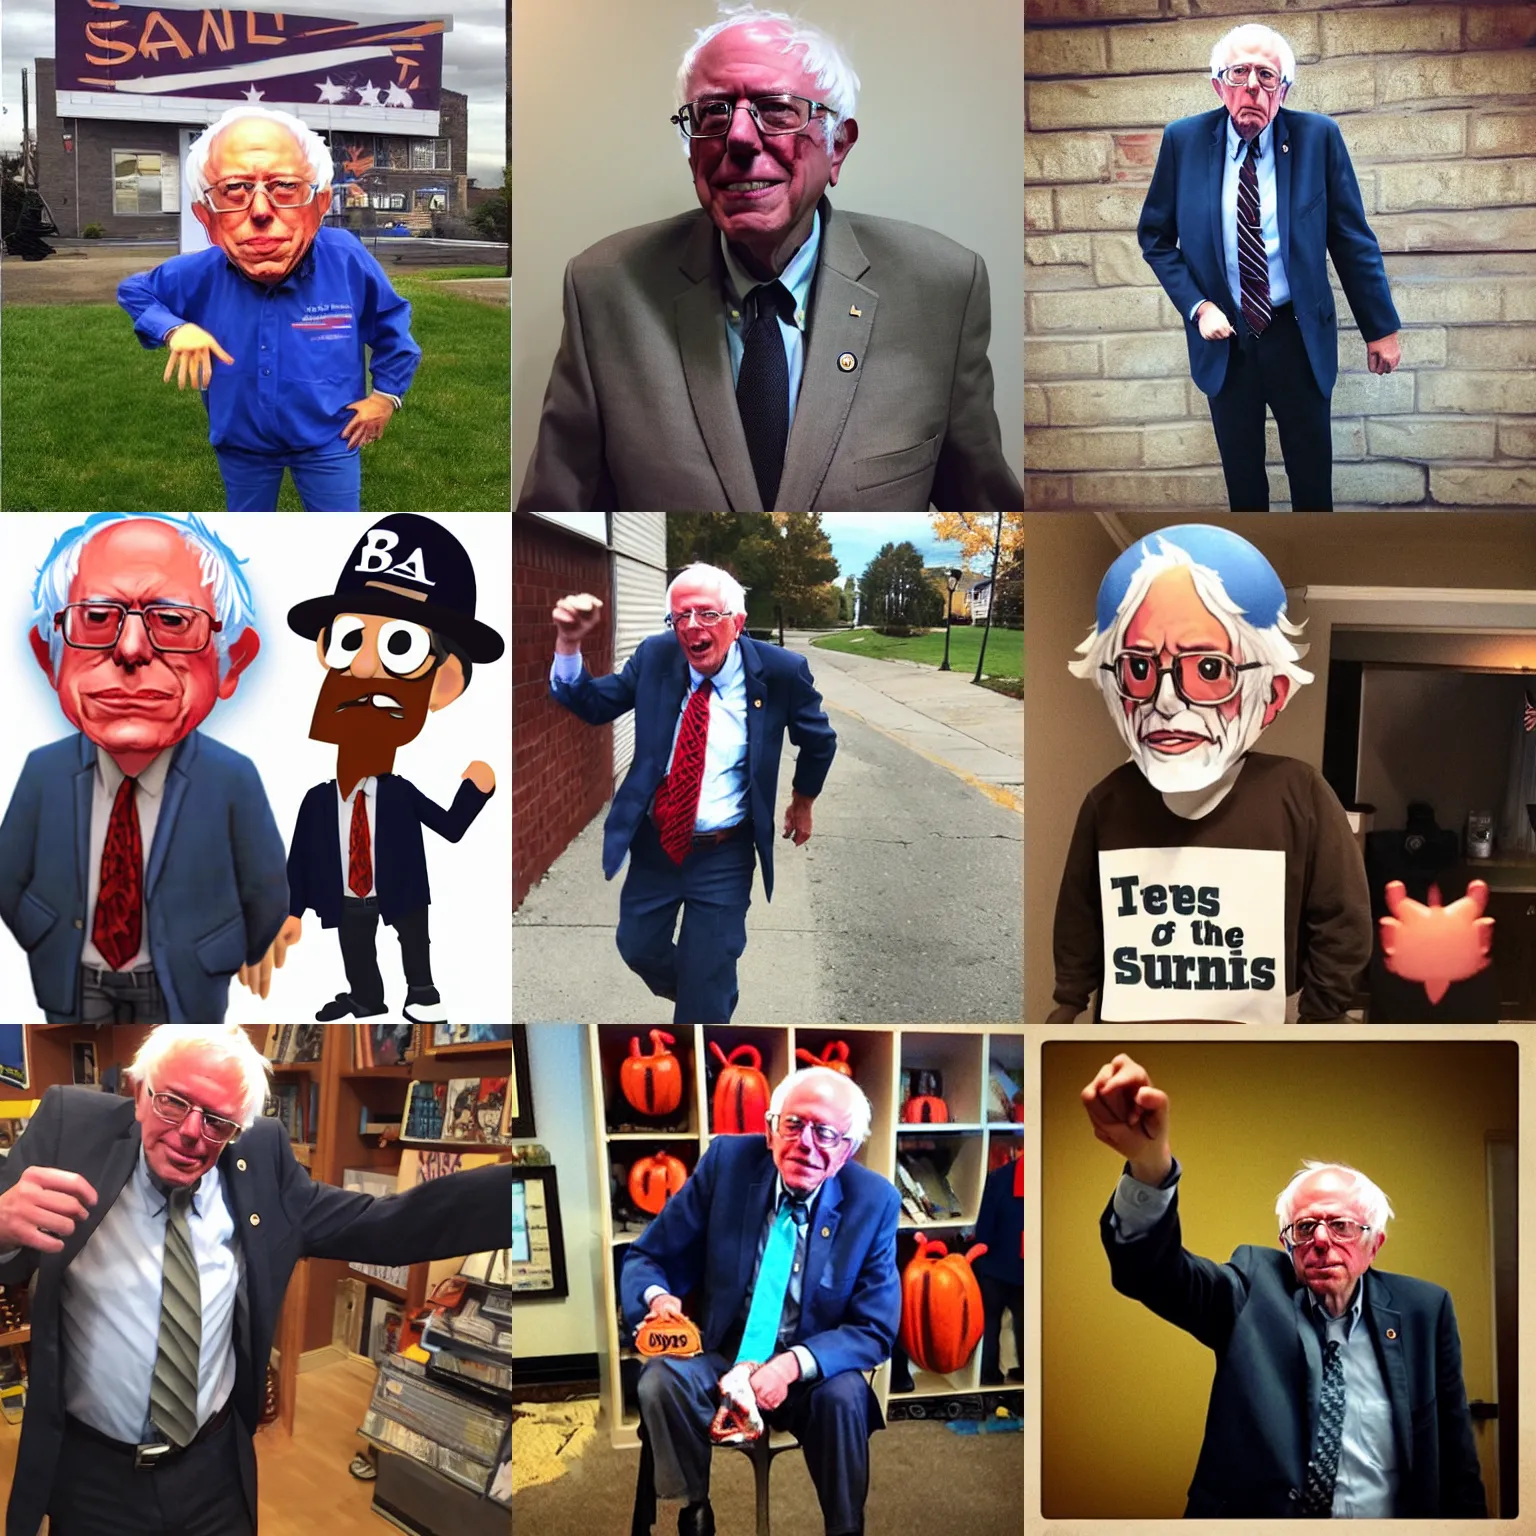 Prompt: “Bernie Sanders costume in the game Fall Guys”